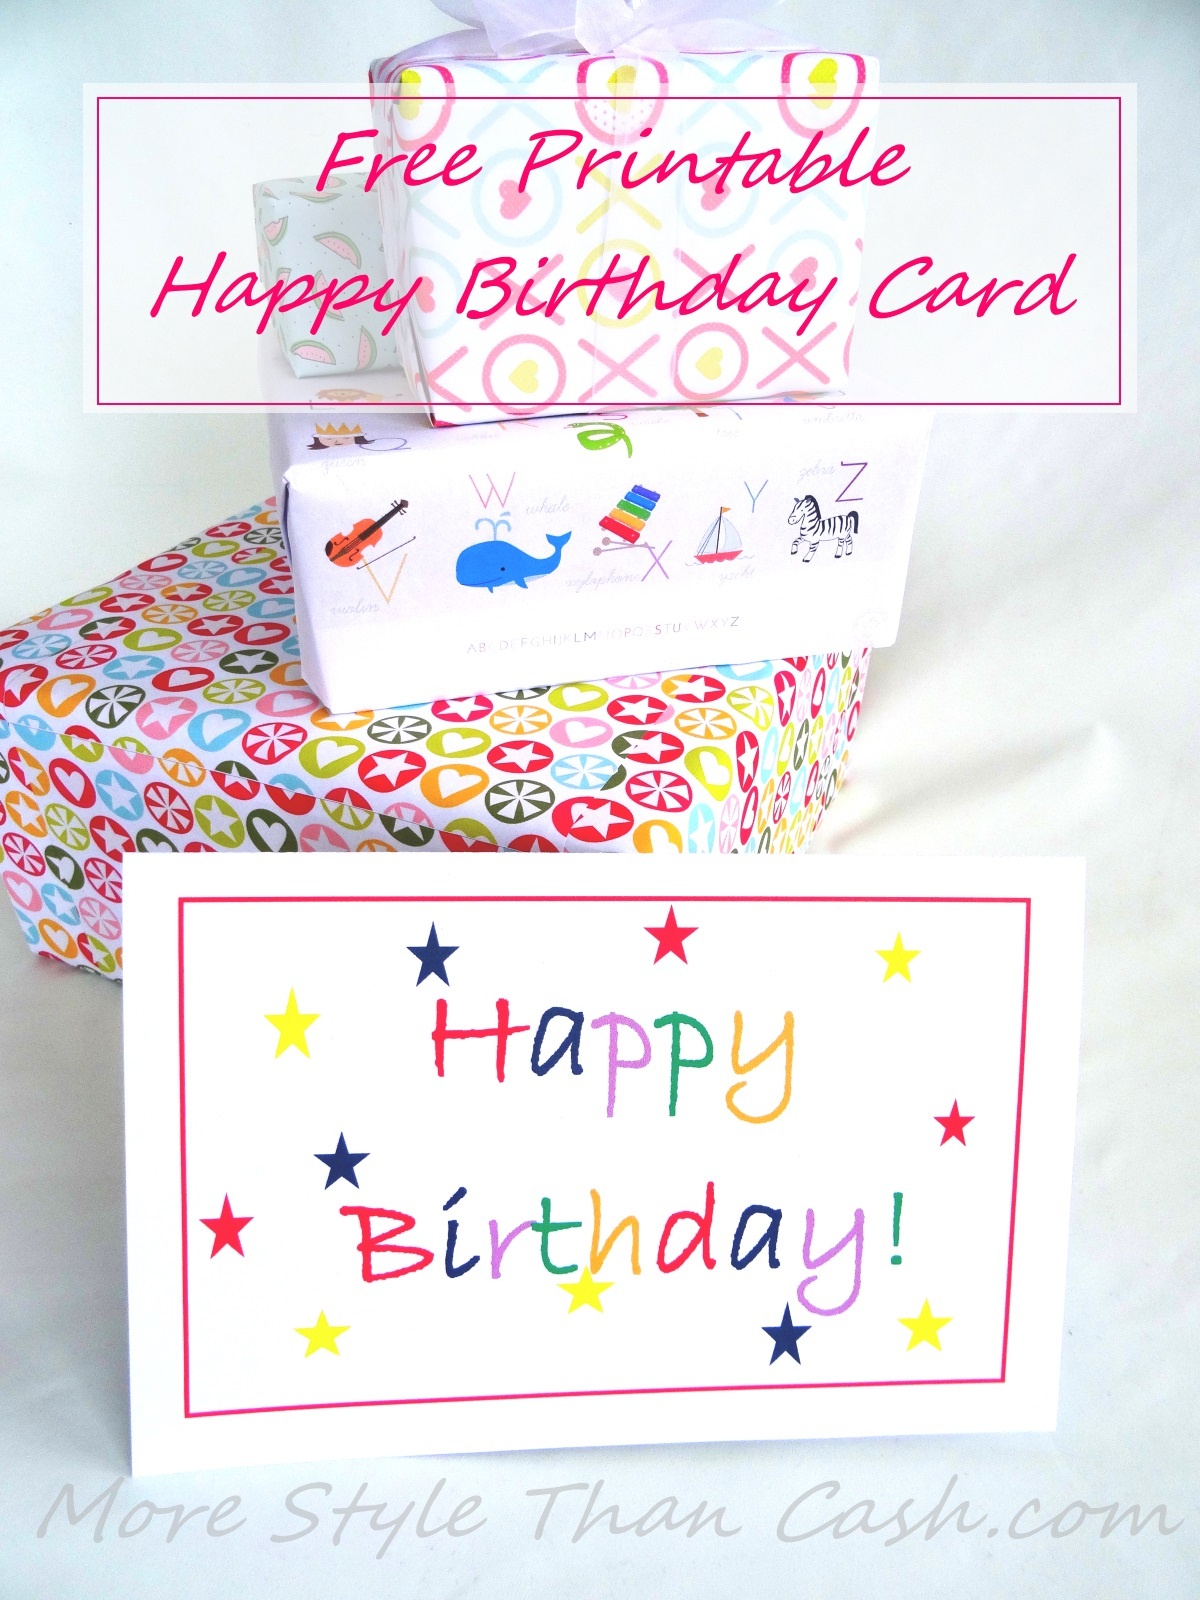 Free Printable Birthday Card - Free Printable Money Cards For Birthdays